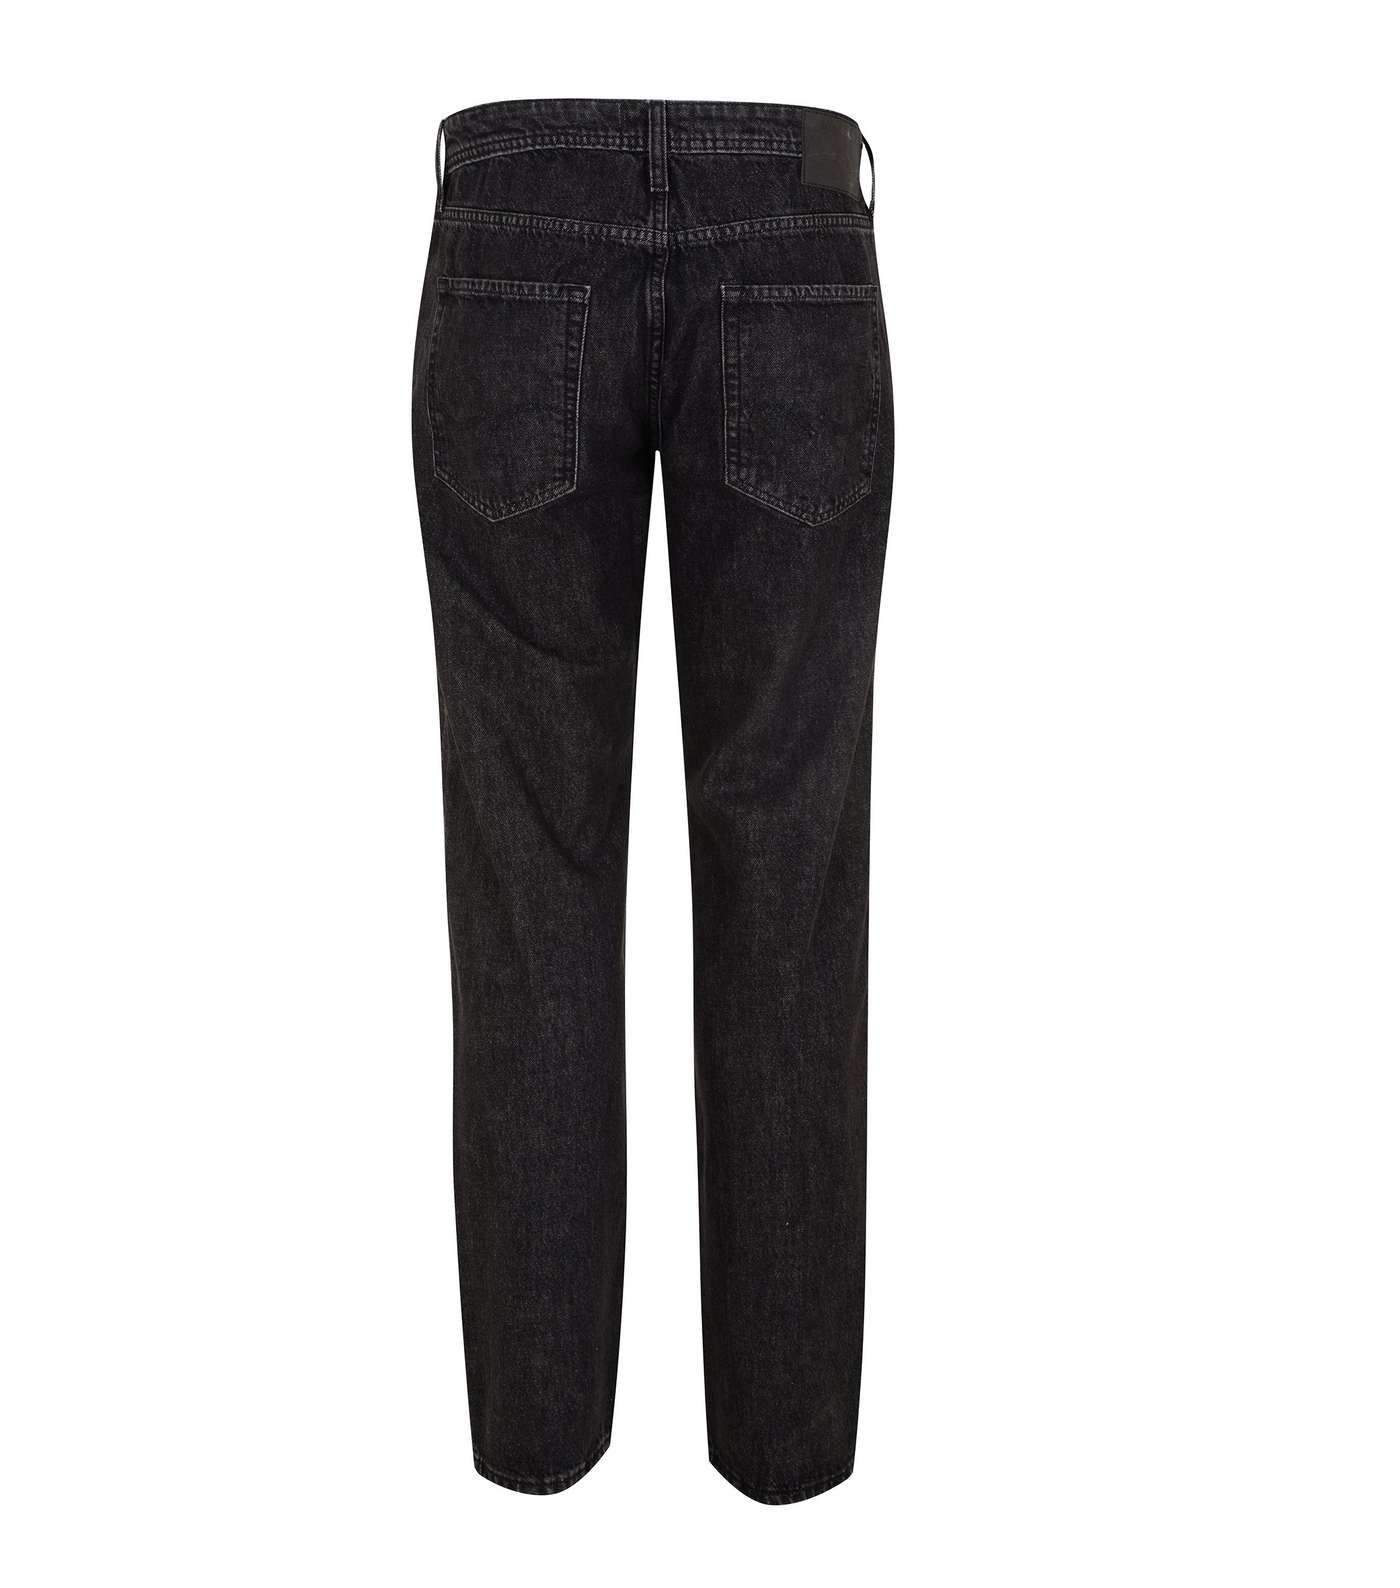 Jack & Jones Black Slim Fit Jeans Image 2